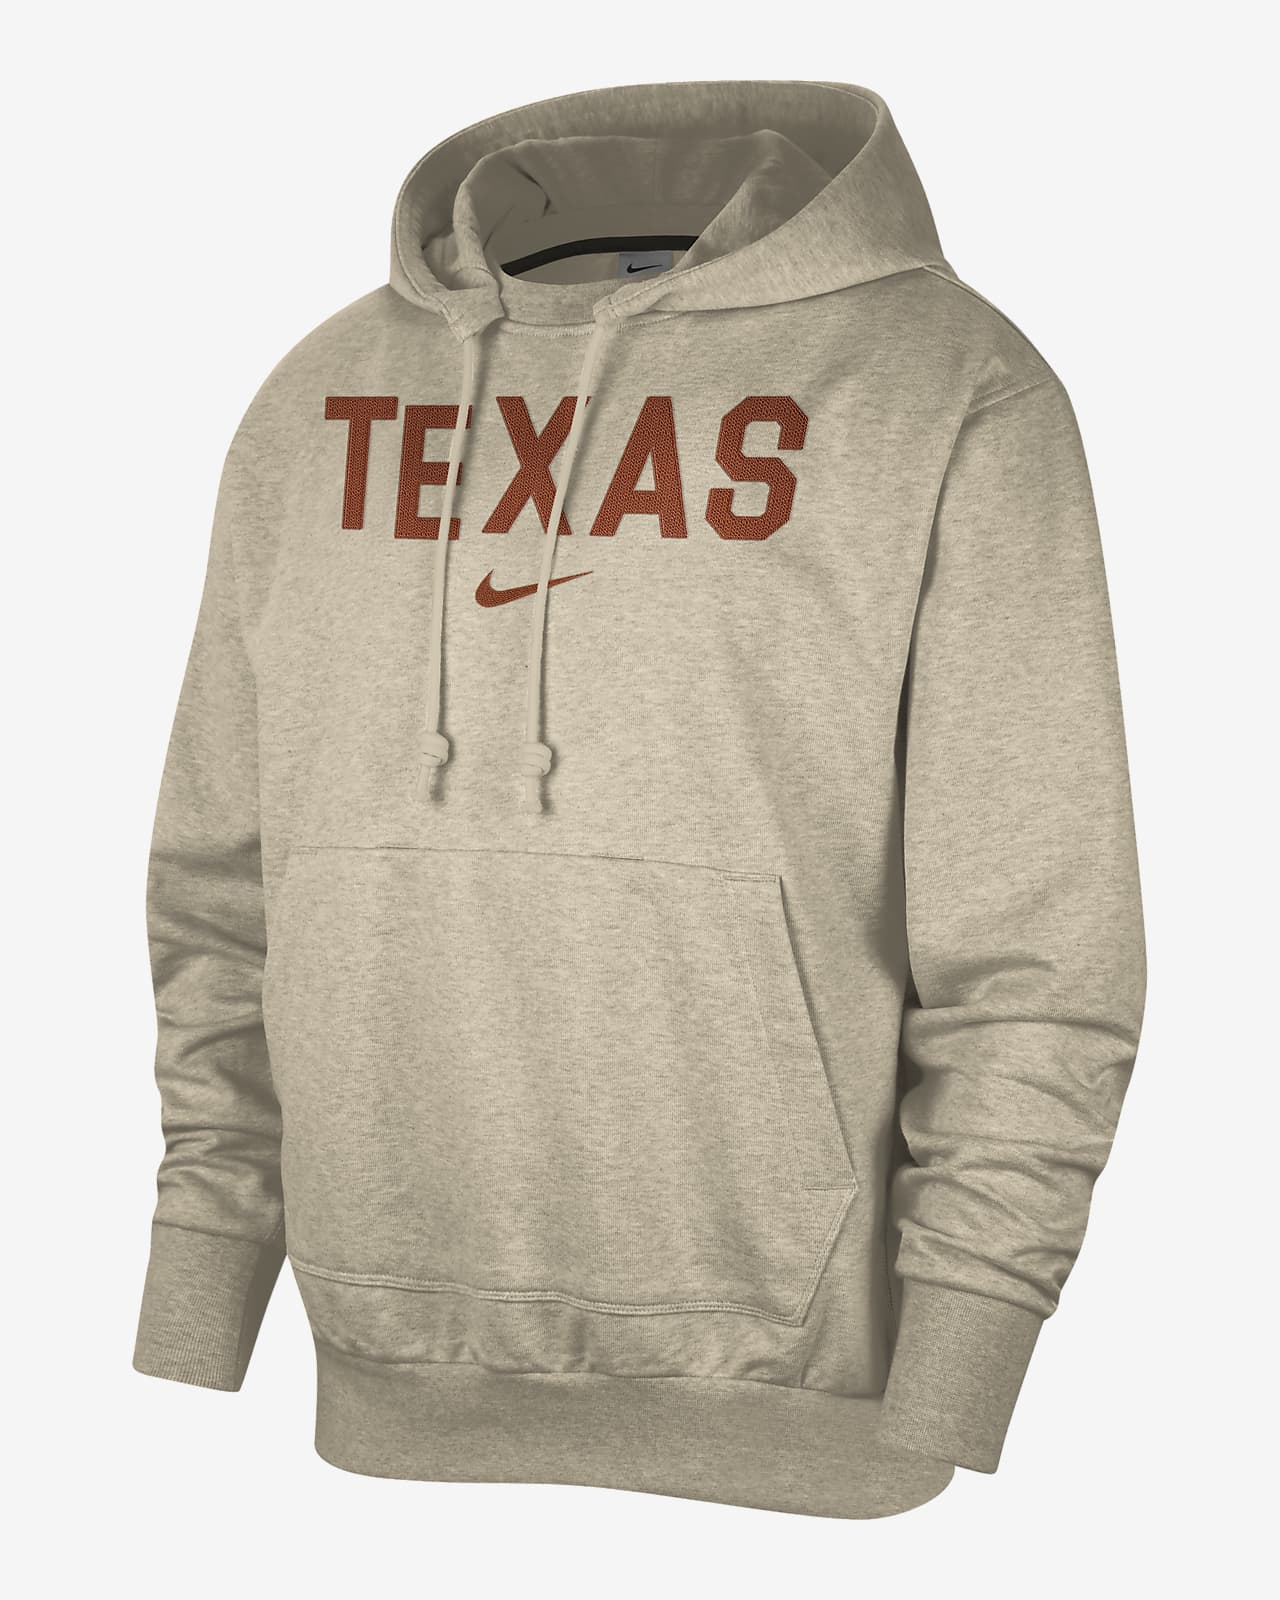 Texas Standard Issue Men's Nike College Pullover Hoodie